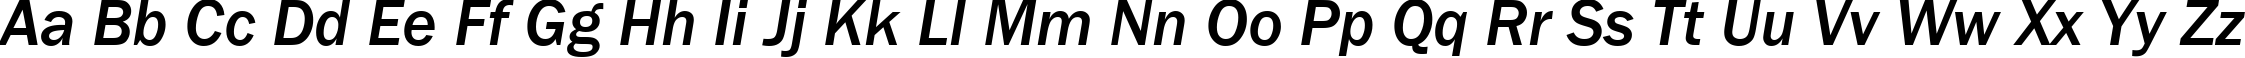 Пример написания английского алфавита шрифтом Franklin Gothic Medium Italic